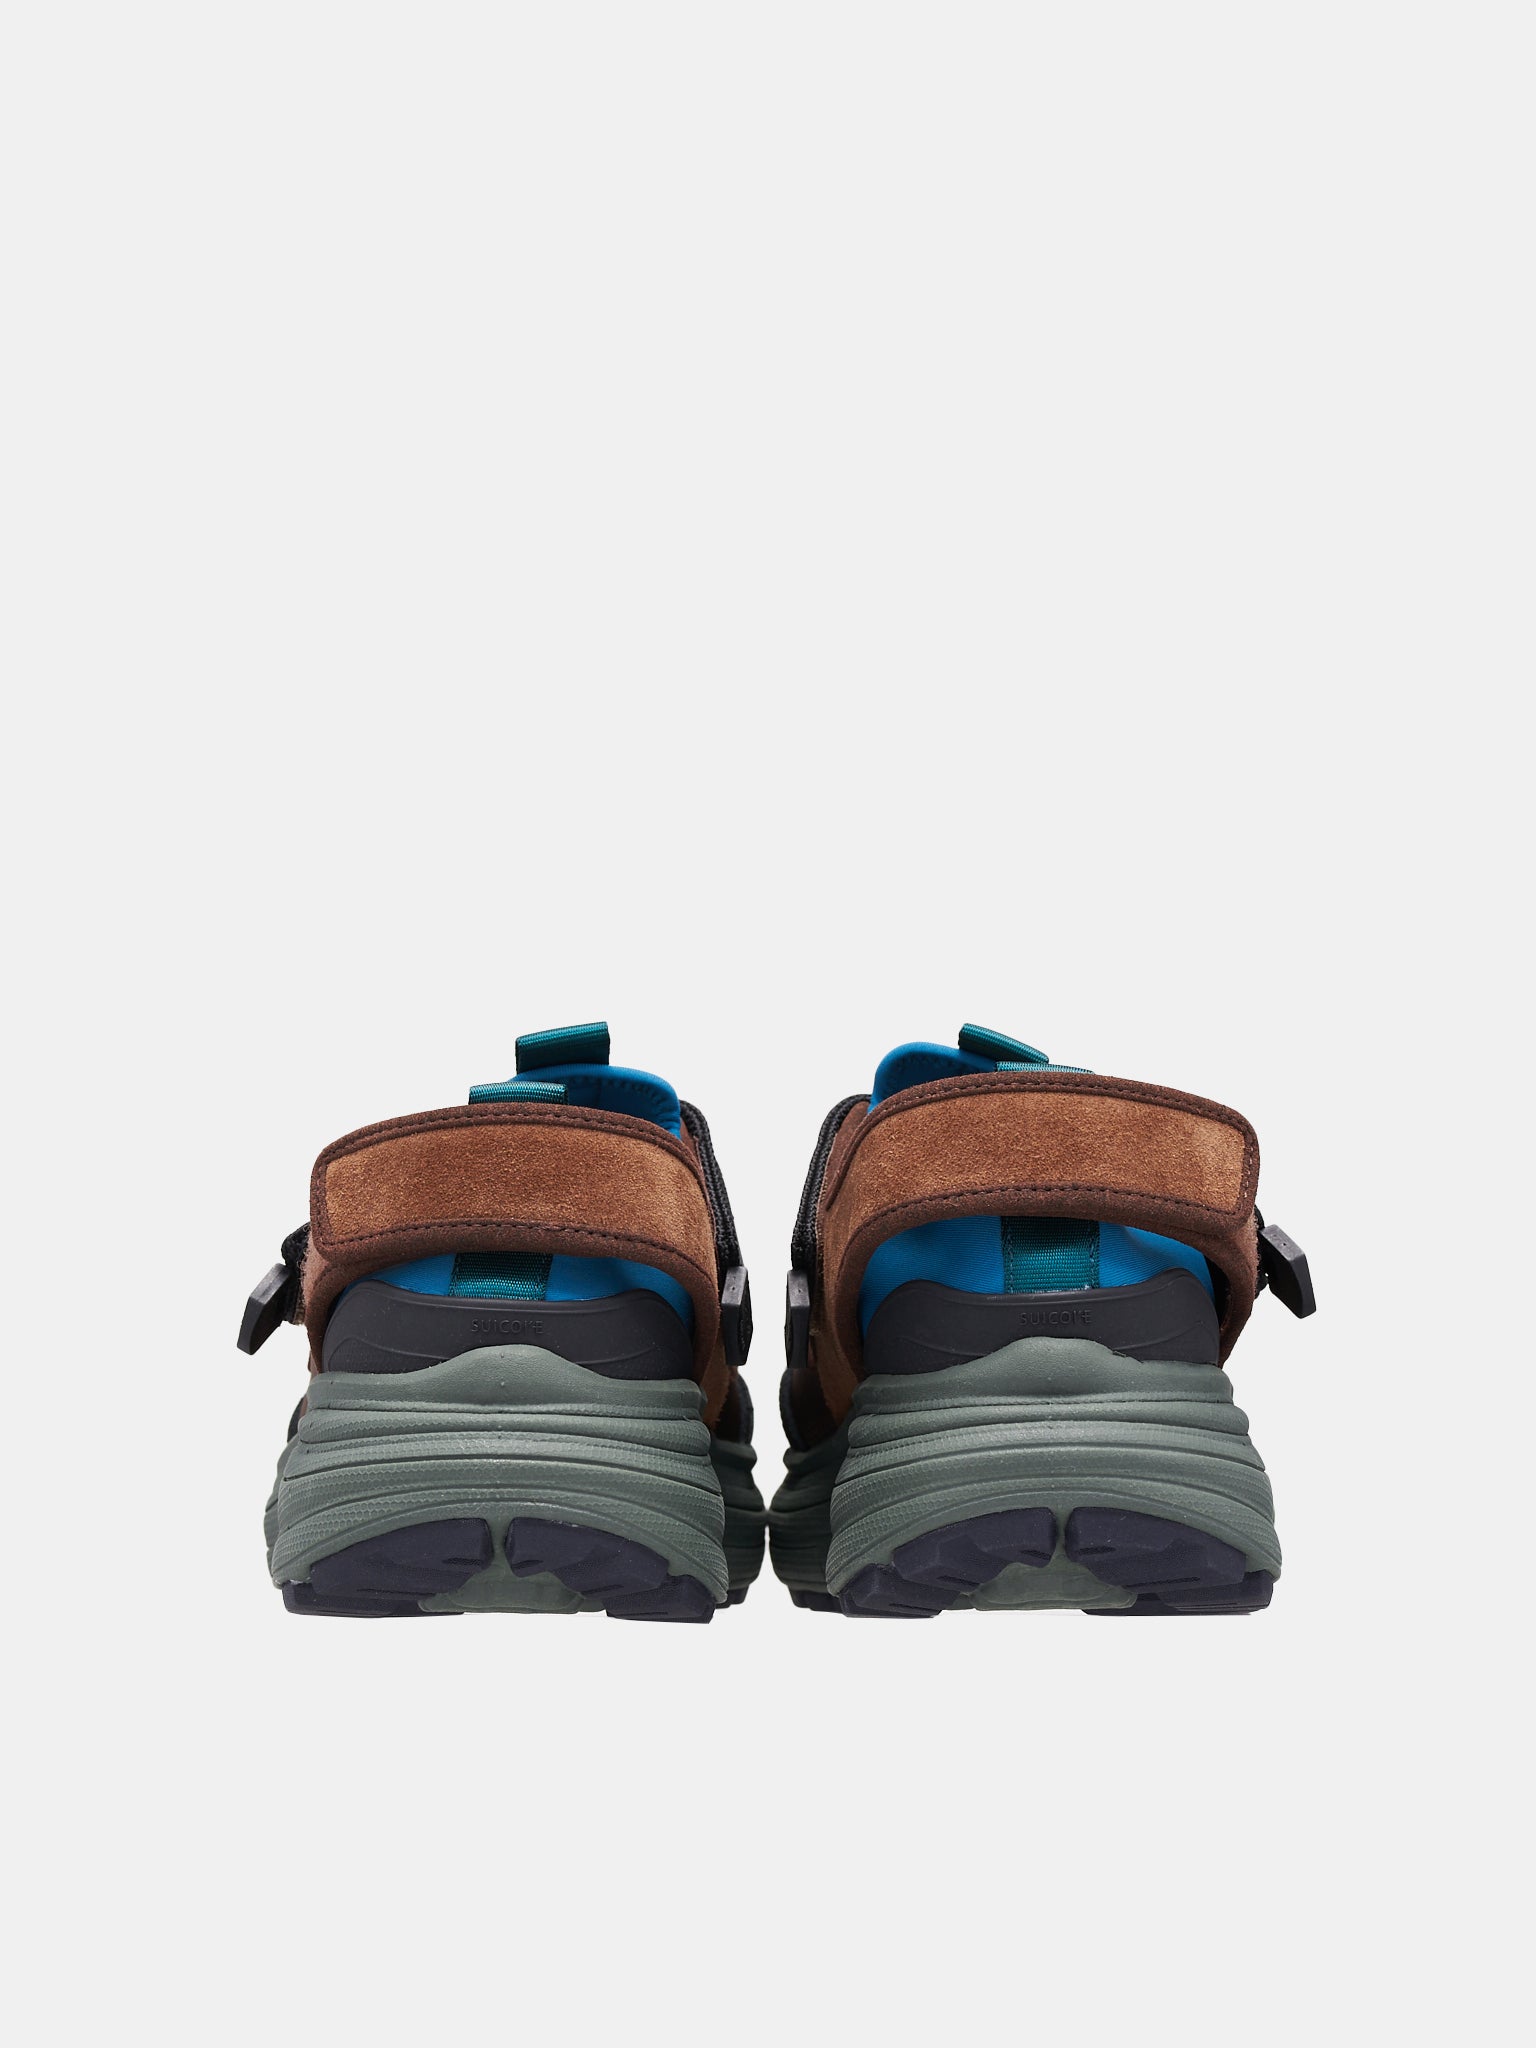 Tred Sneakers (OG-349-BROWN-GREEN)